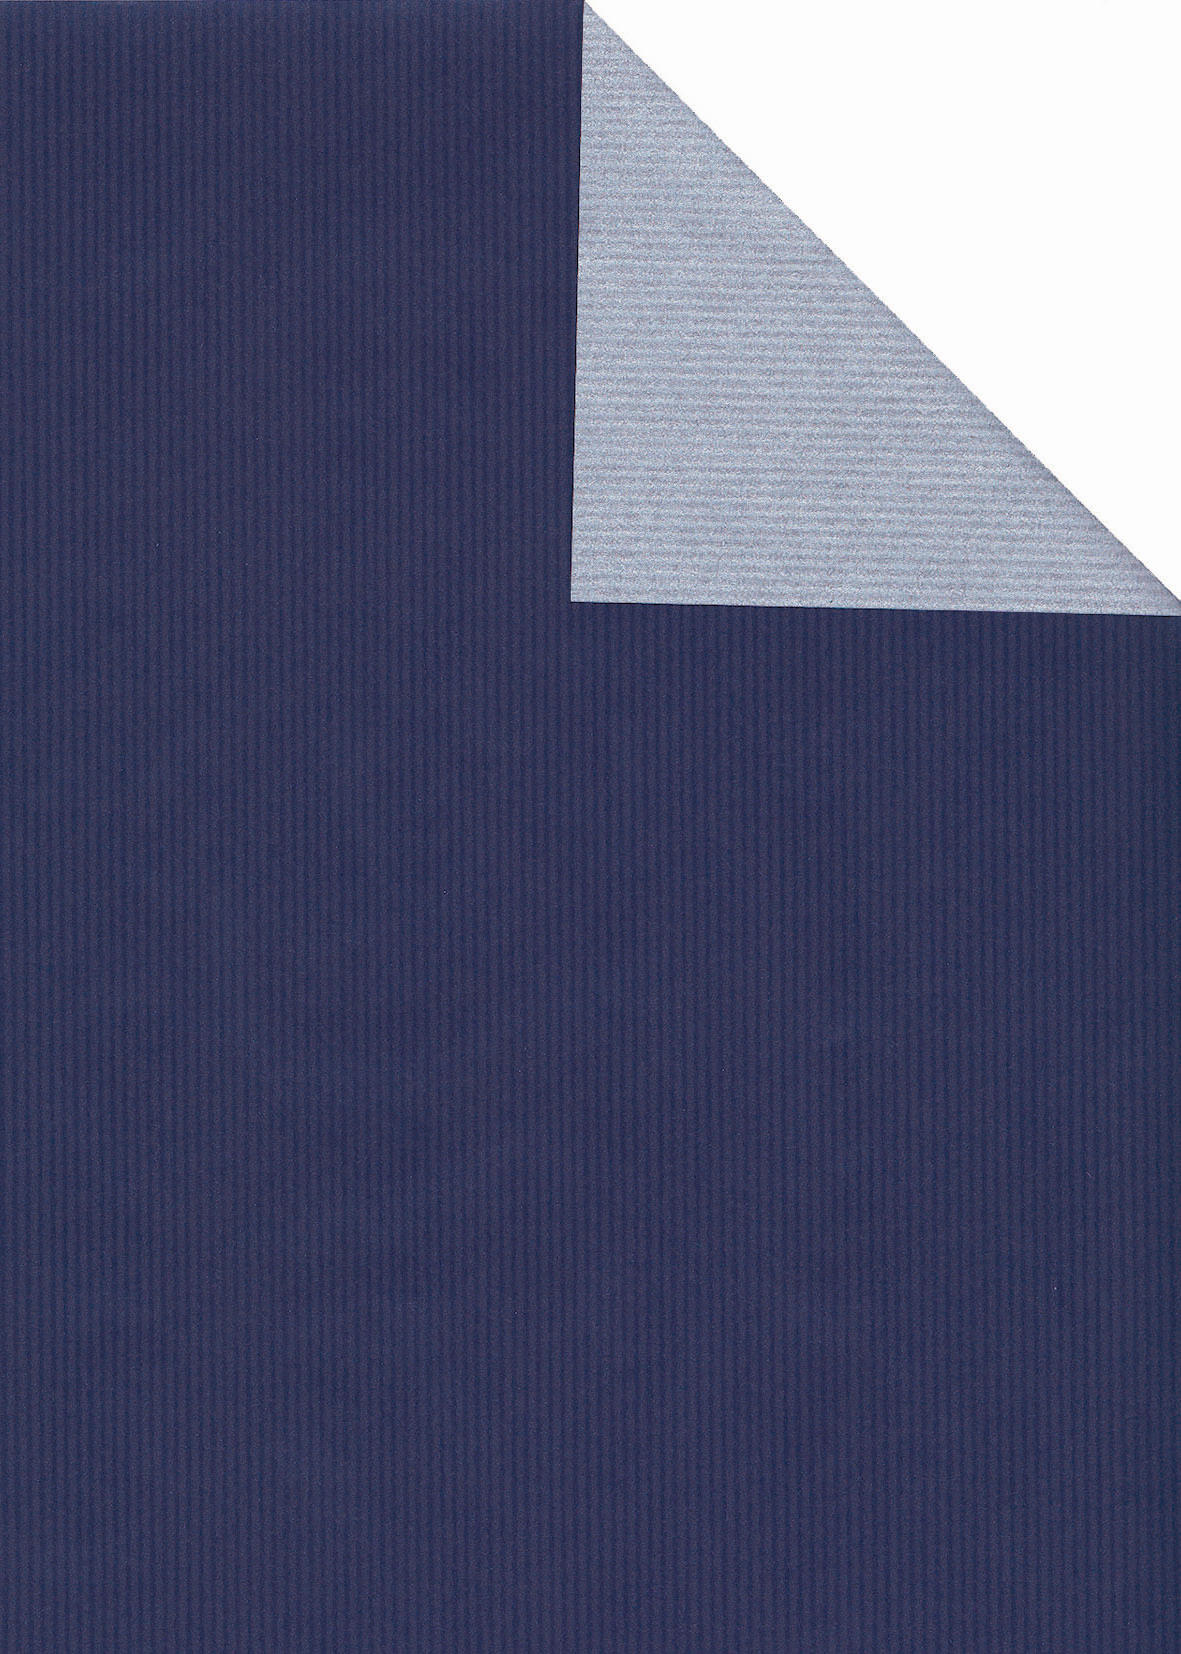 Bogen 70x 100cm, Uni Duo, d'blau/silber